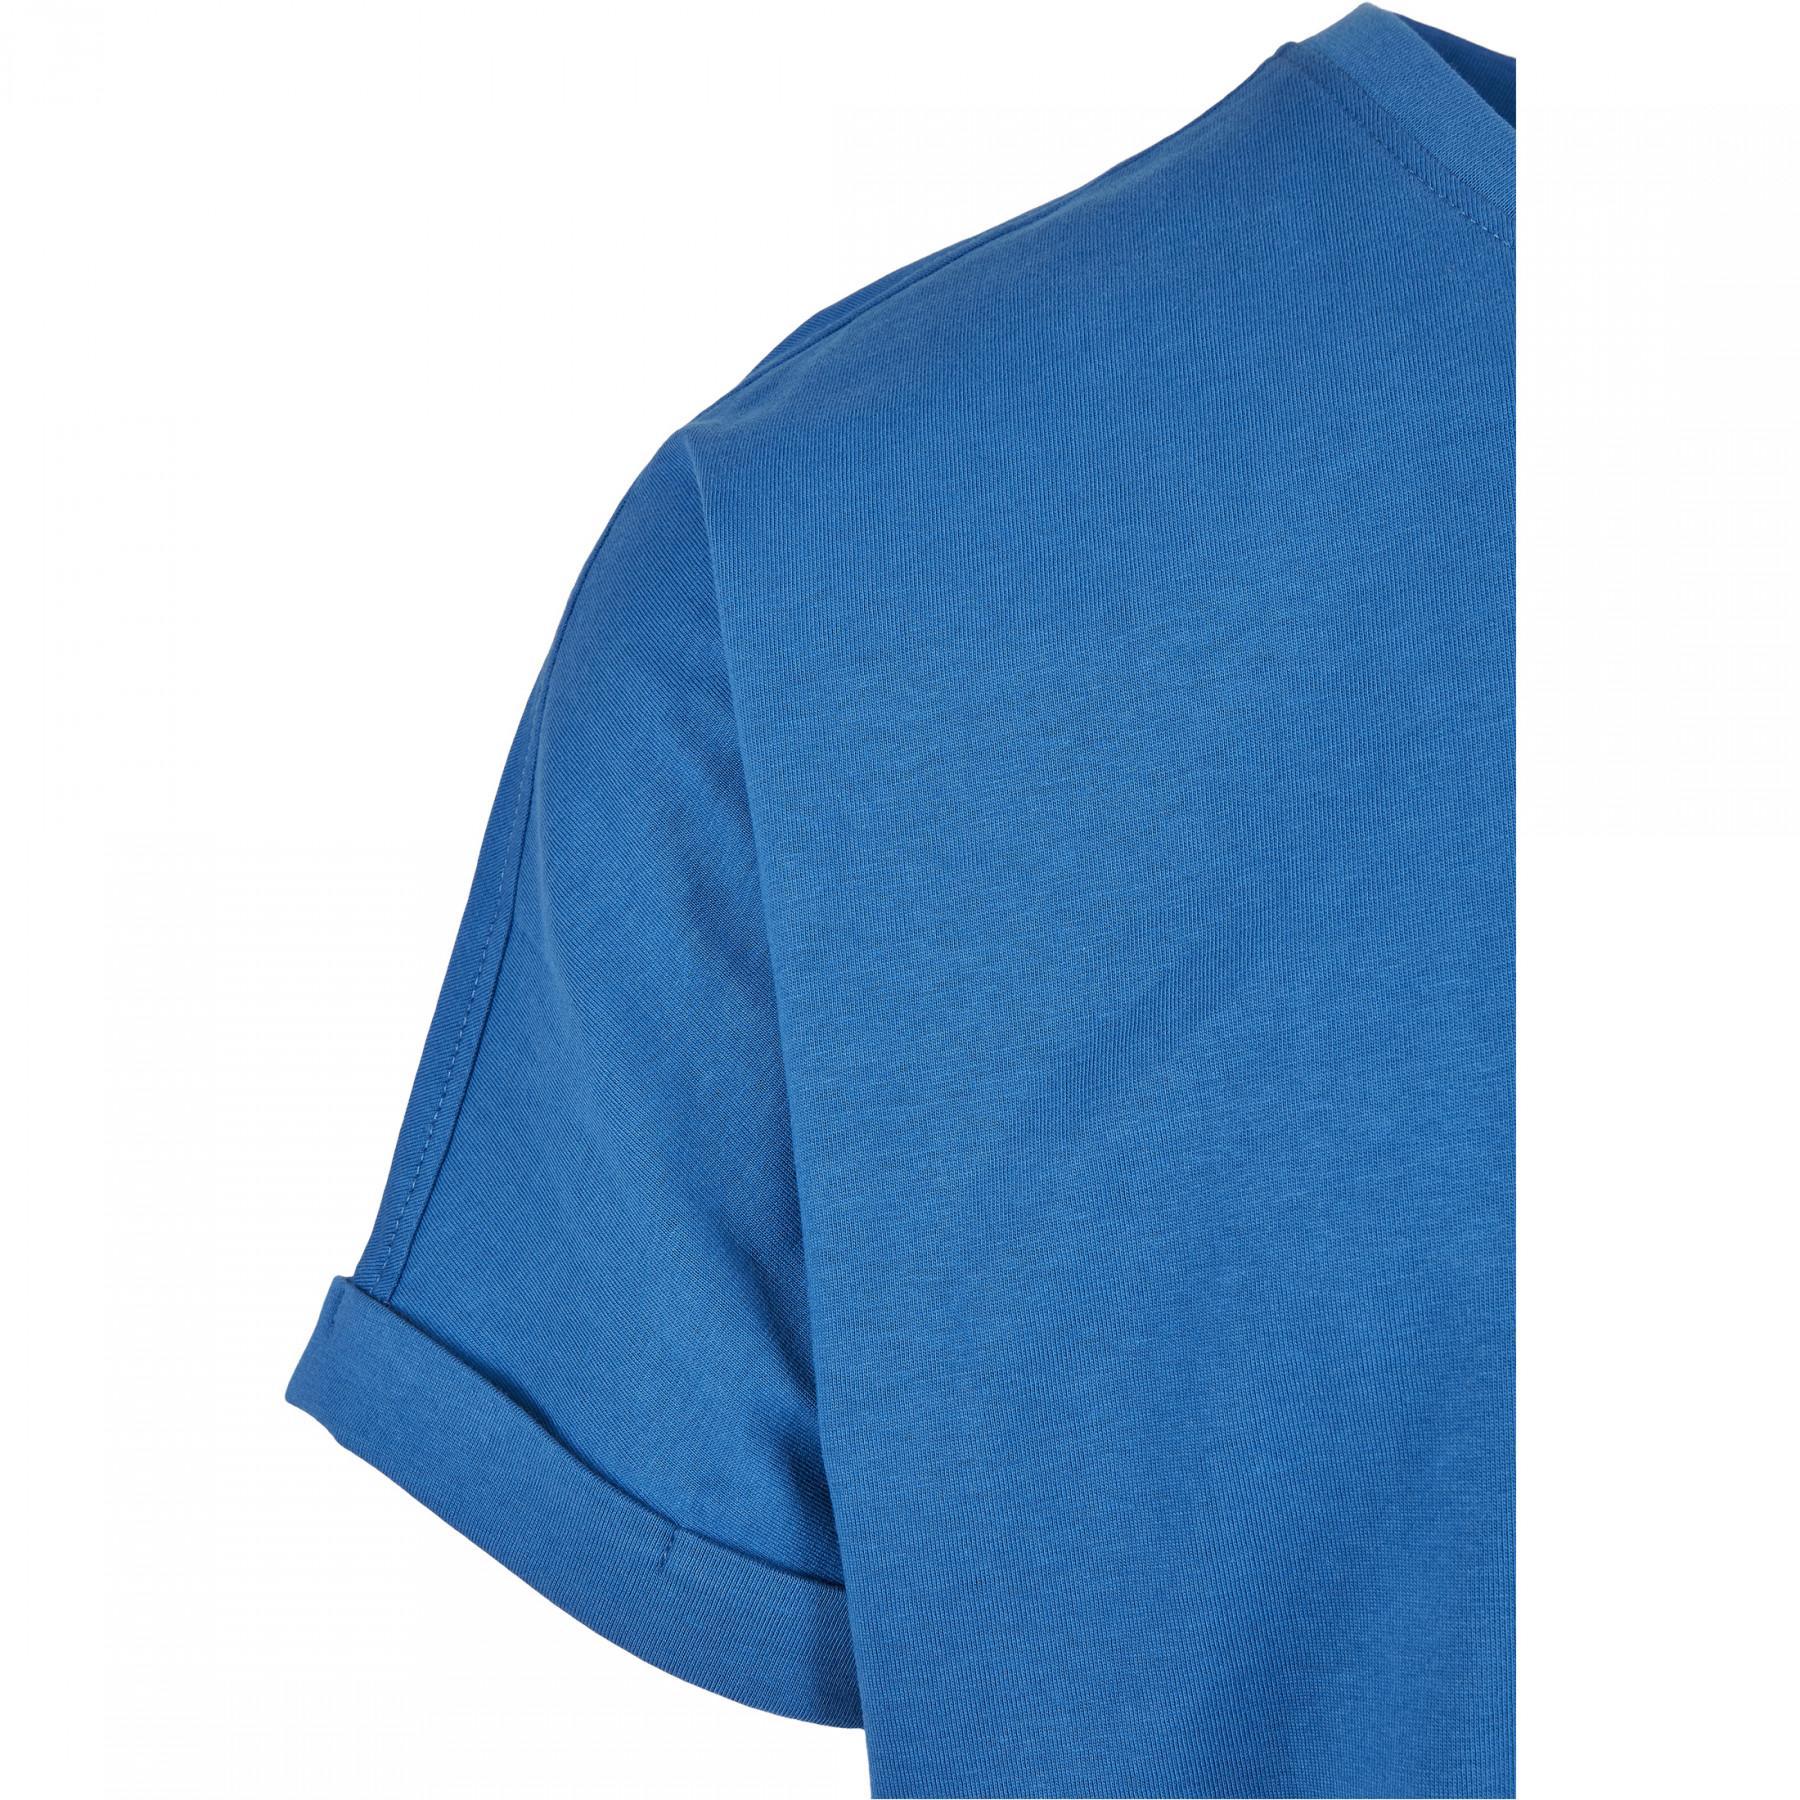 T-shirt Urban Turnup - Shaped Classics and Polo - Lifestyle shirts Tee Man - T-shirts Long